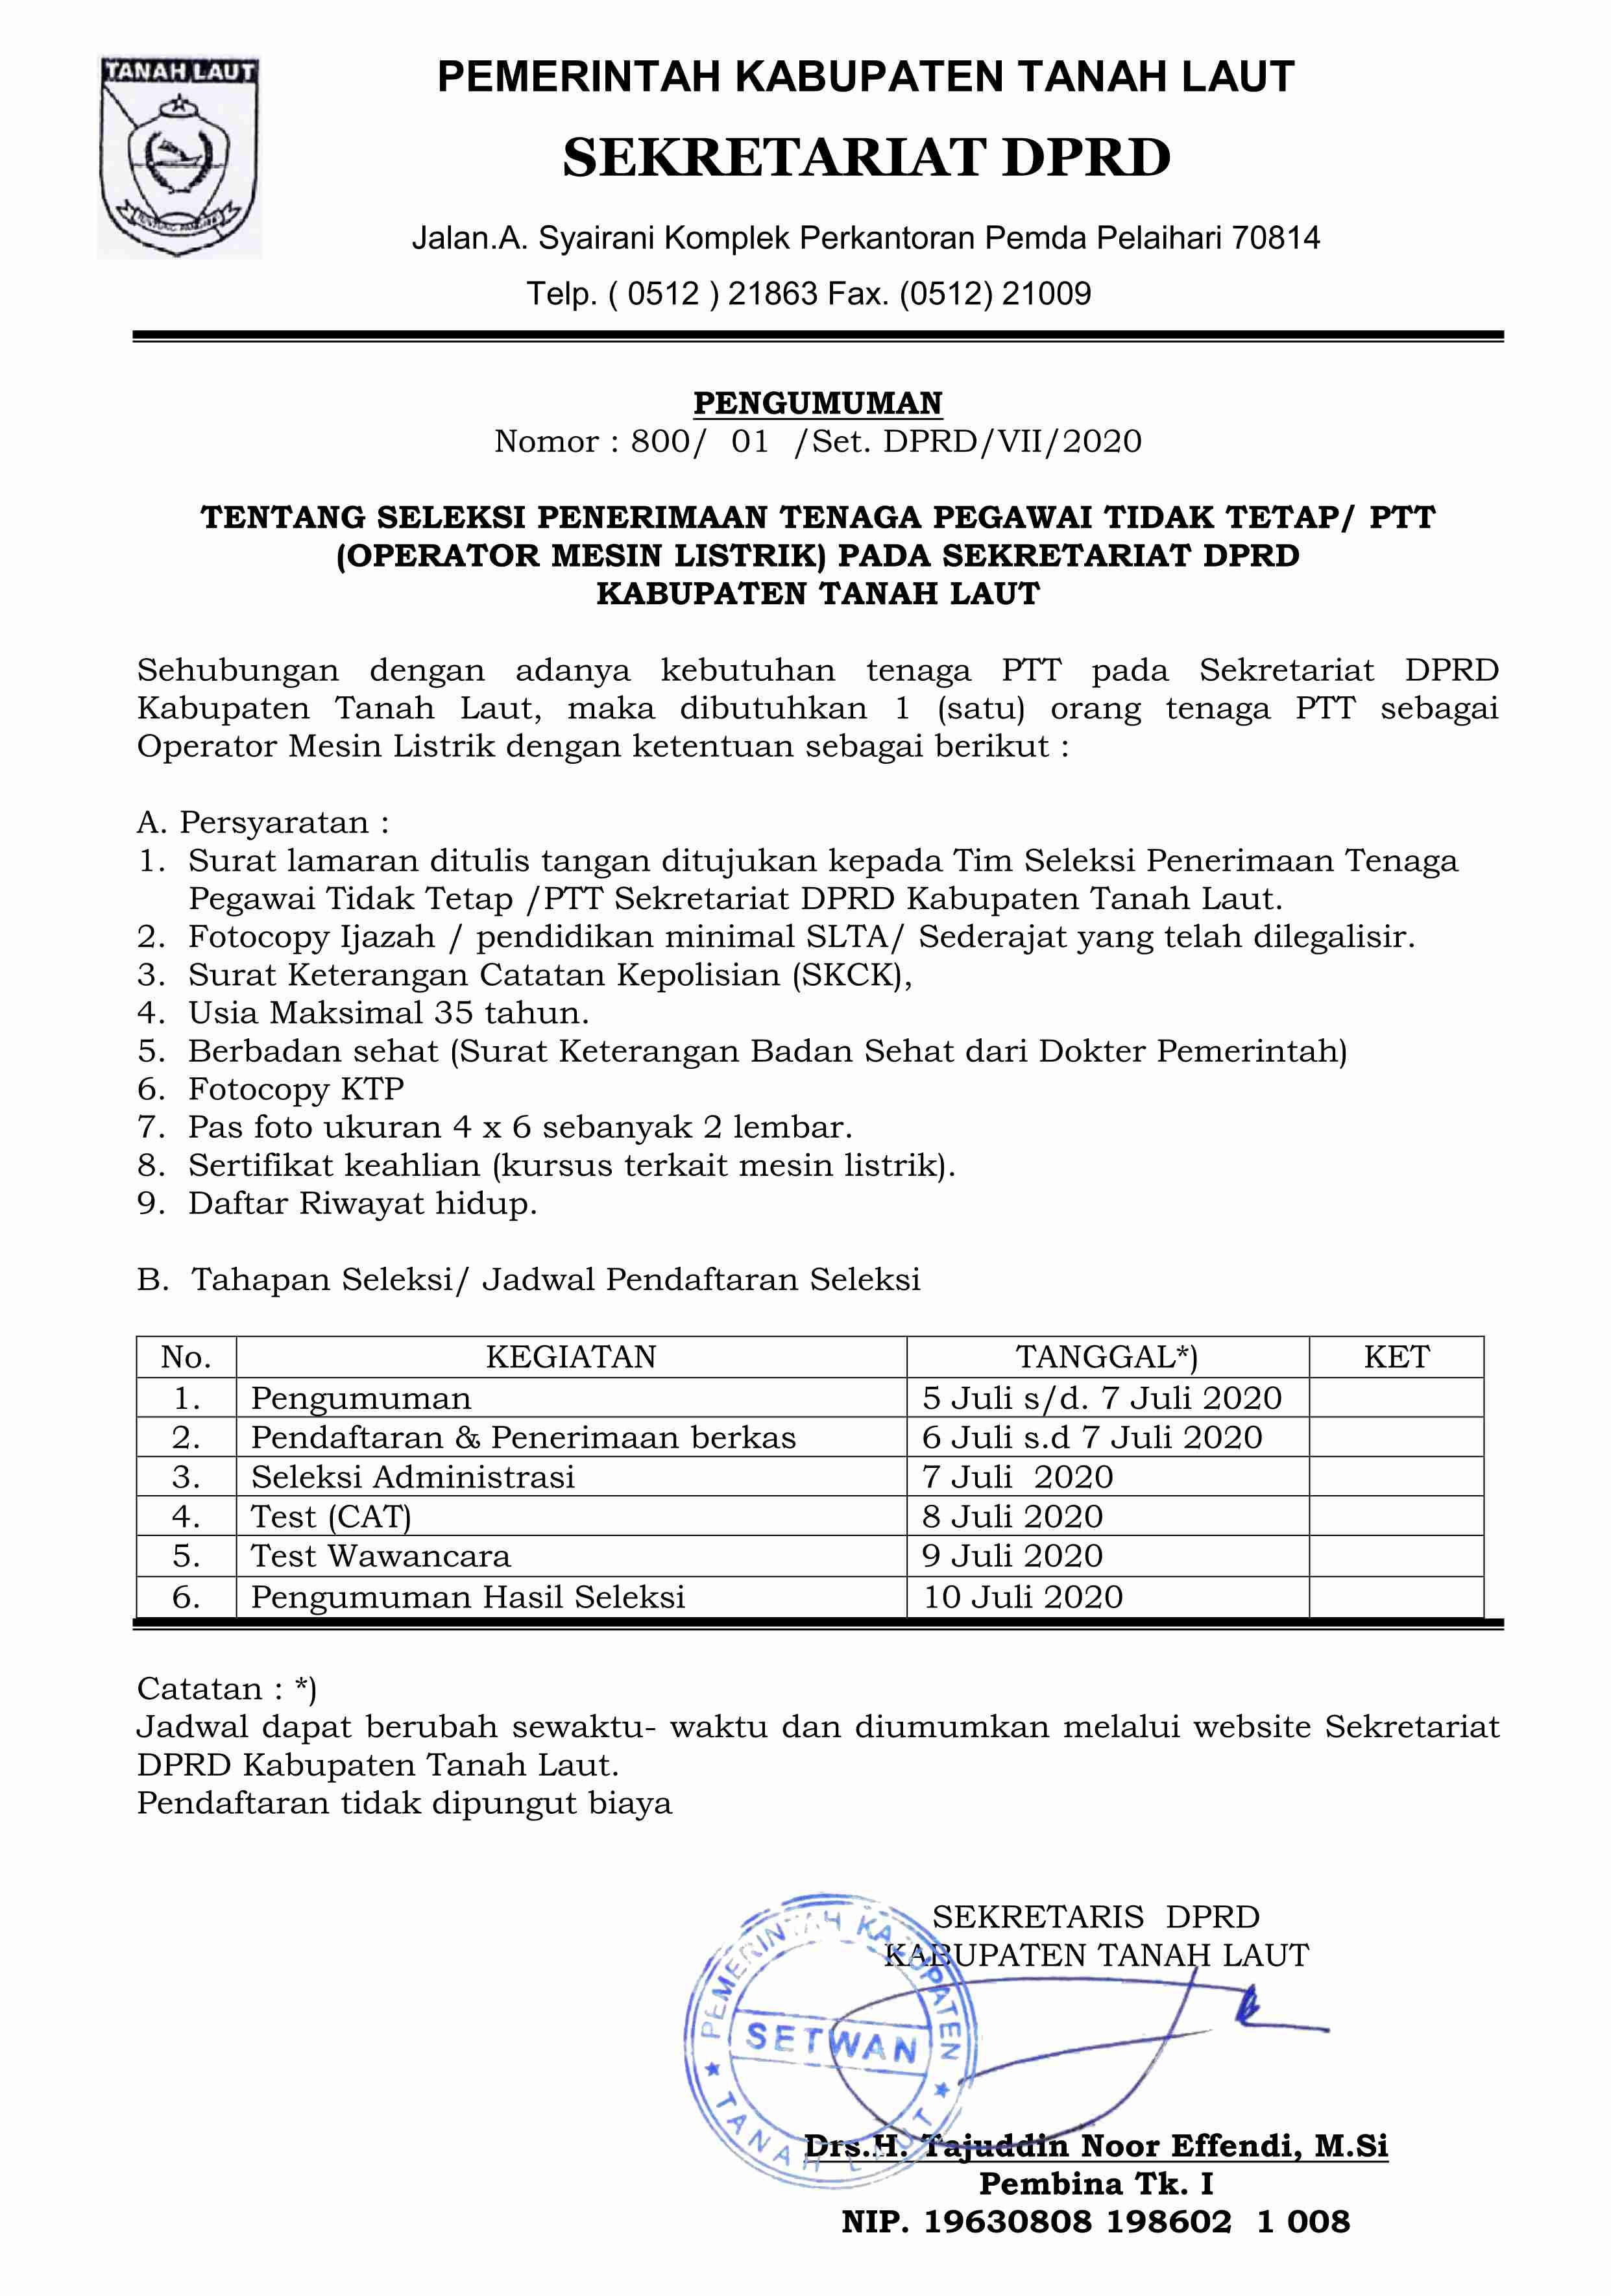 Penerimaan Tenaga Pegawai Tidak Tetap/ PTT (Operator Mesin Listrik) Pada Sekretariat DPRD Kabupaten 